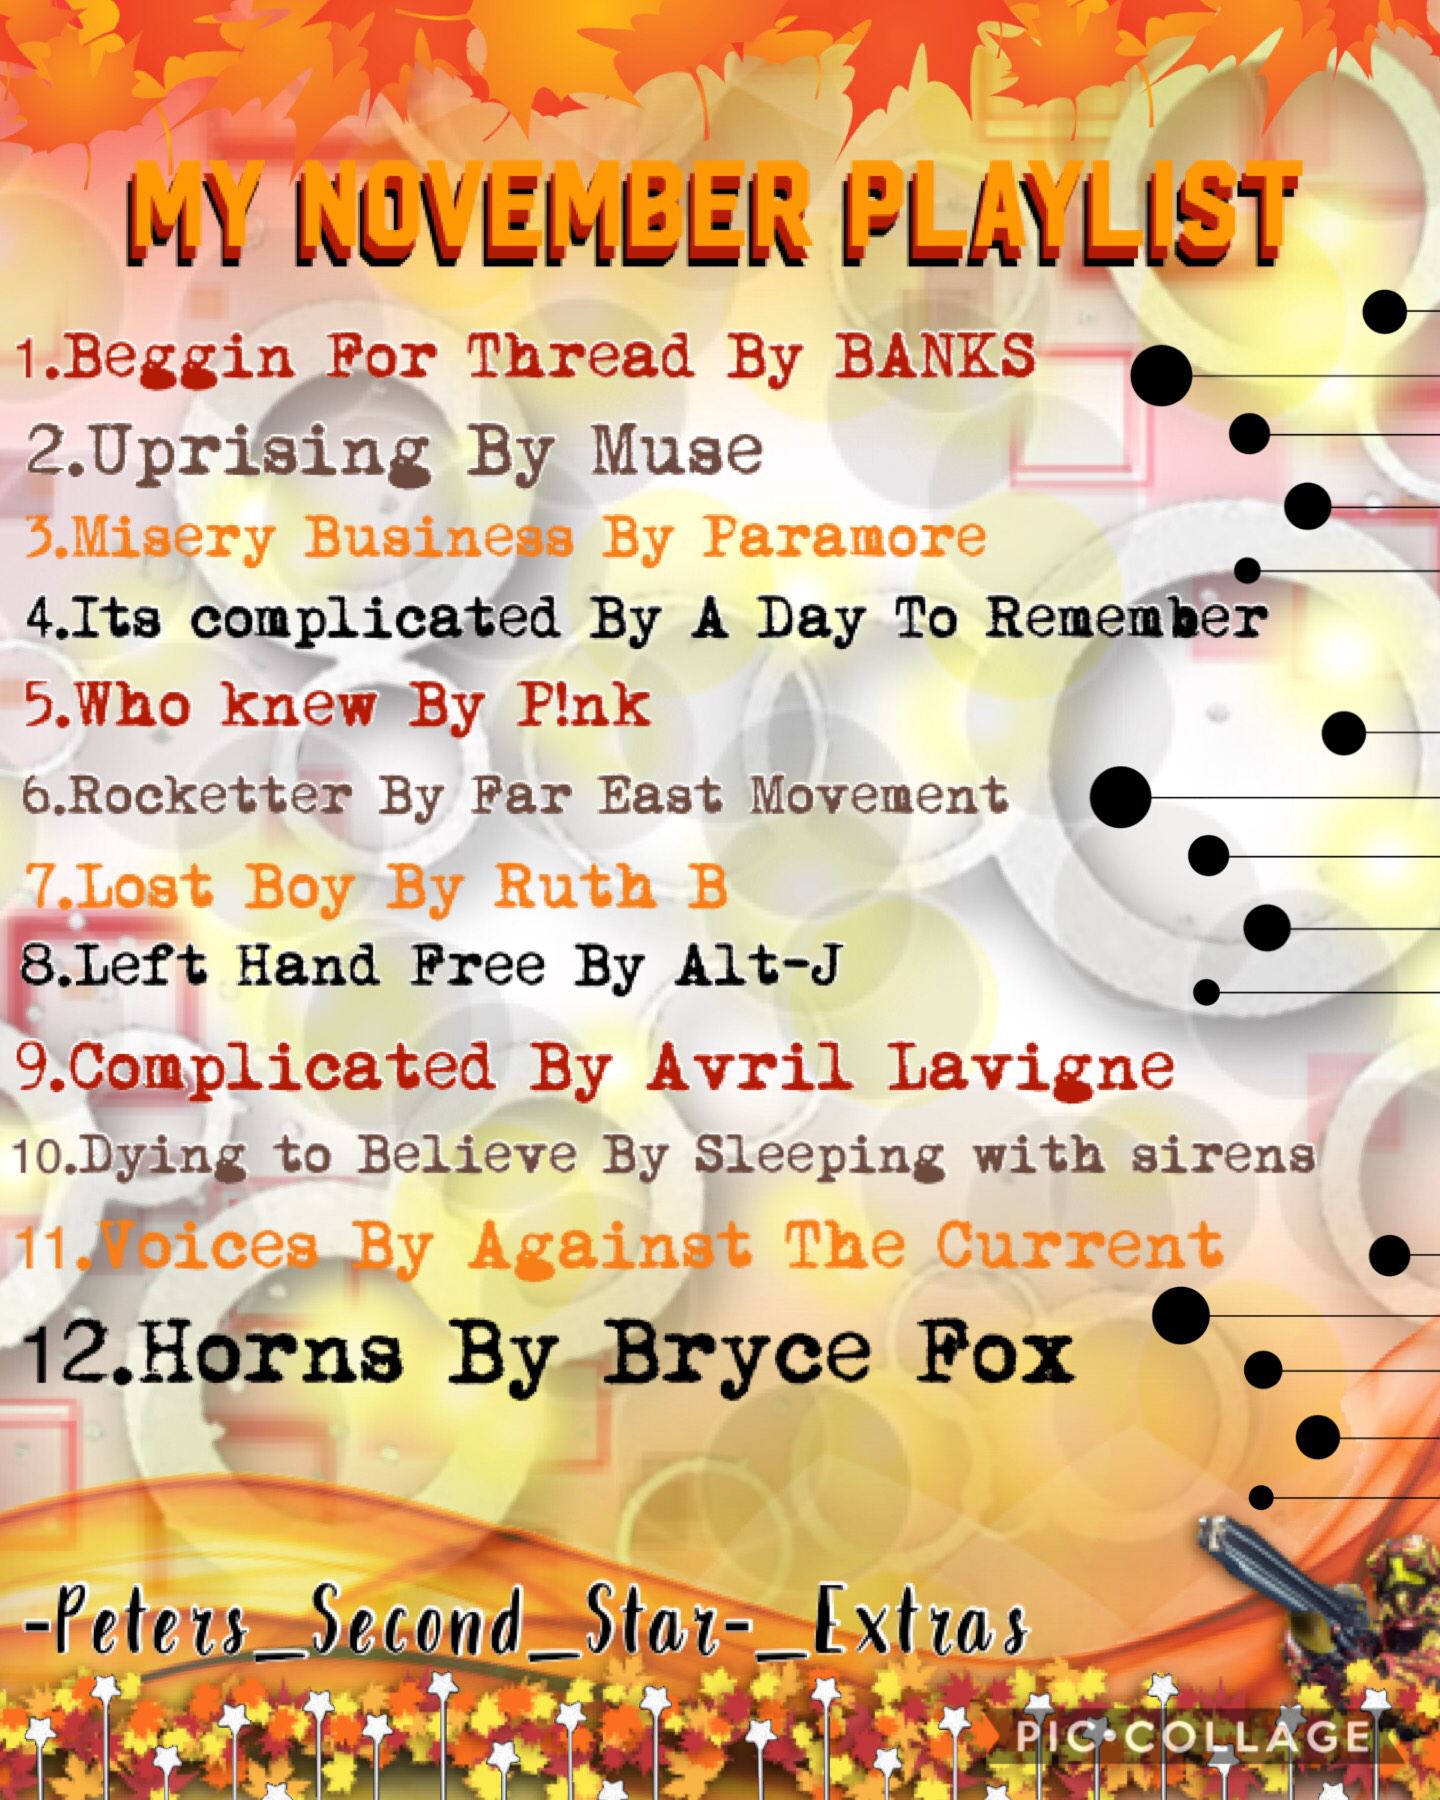 Tapp!!!

My November playlist 😁♥️❤️